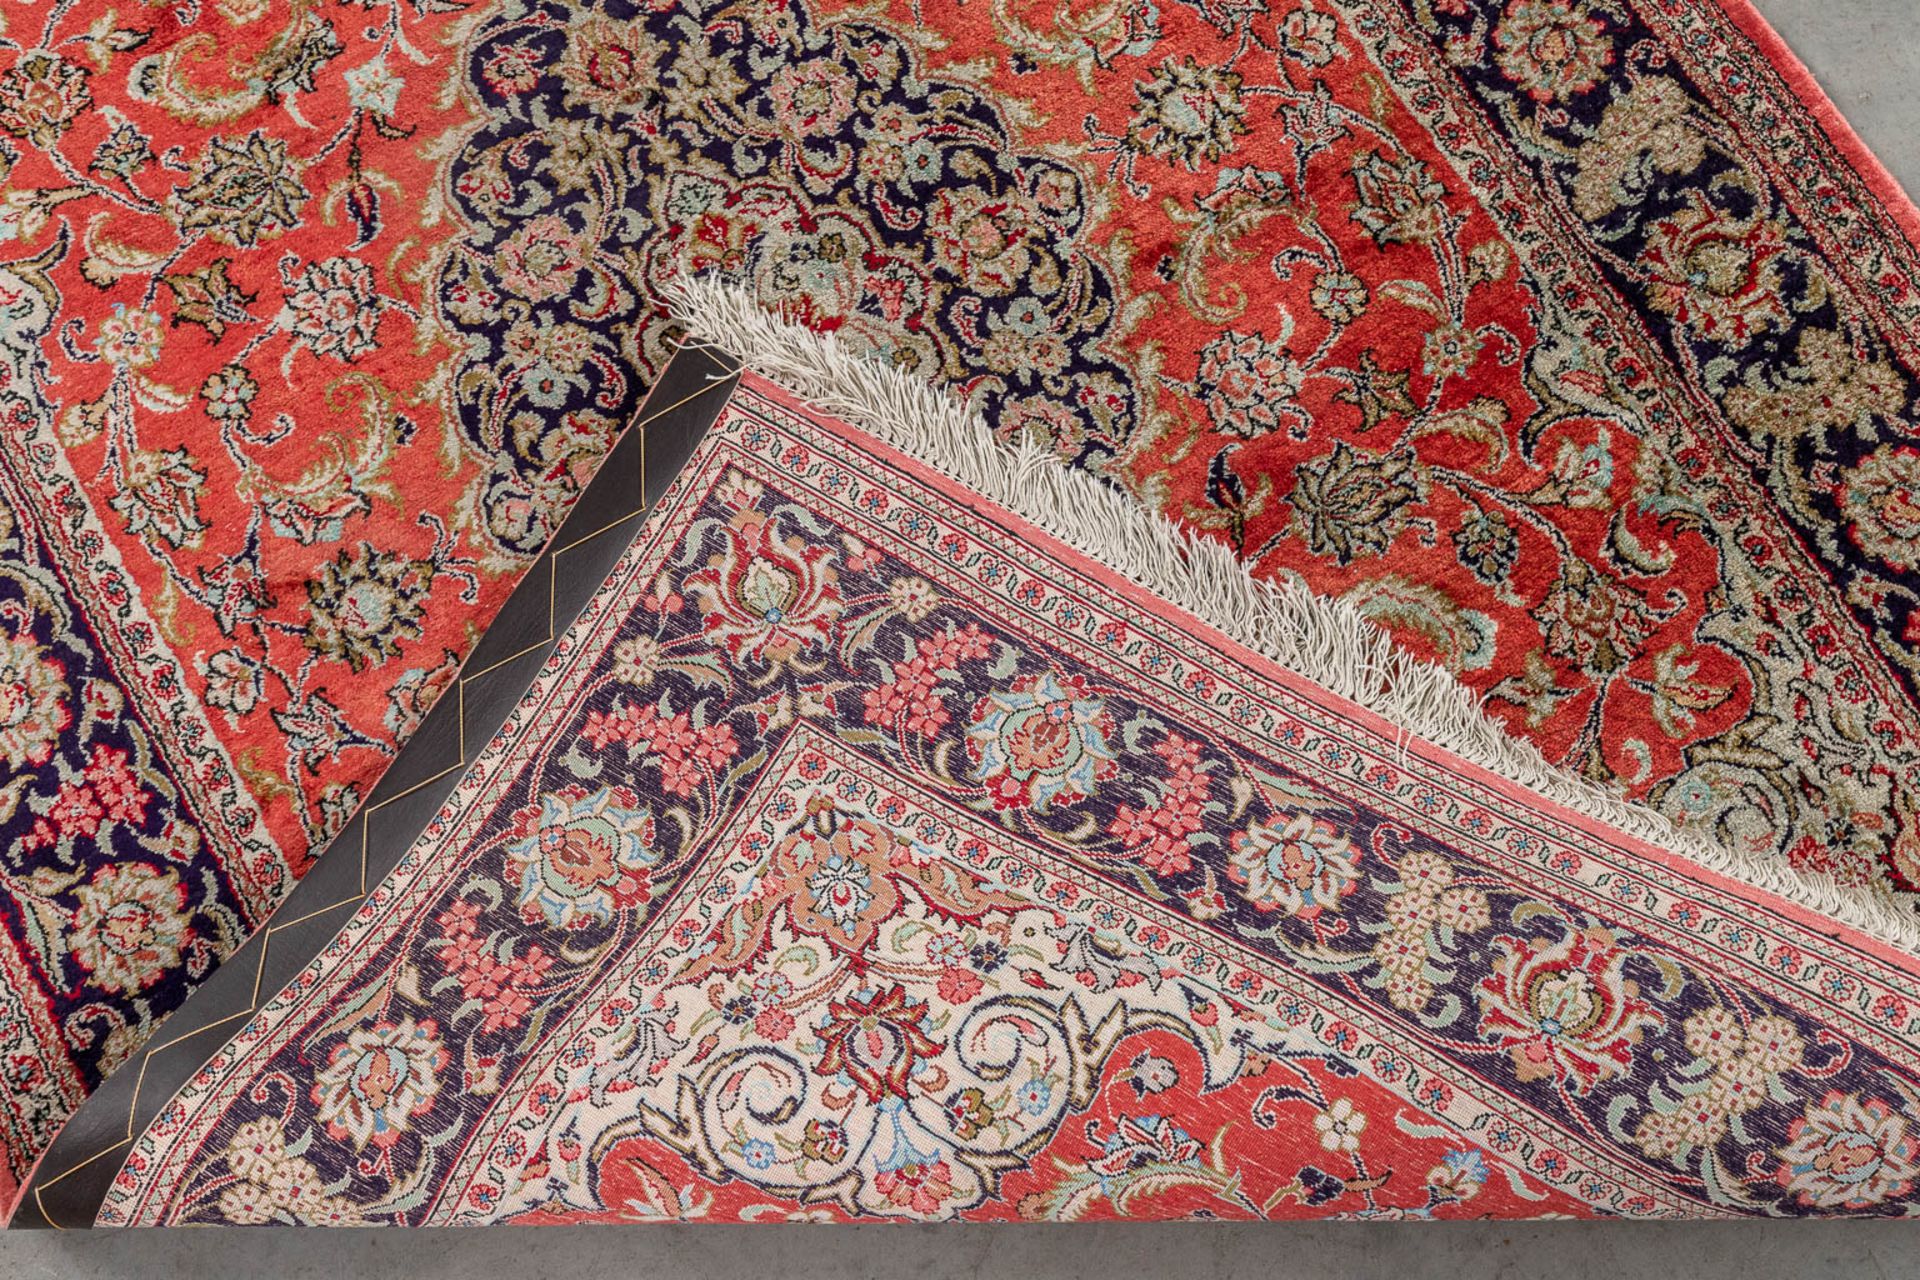 Two Oriental hand-made carpets, Kayseri &amp; Keshan. (D:151 x W:104 cm) - Image 7 of 14